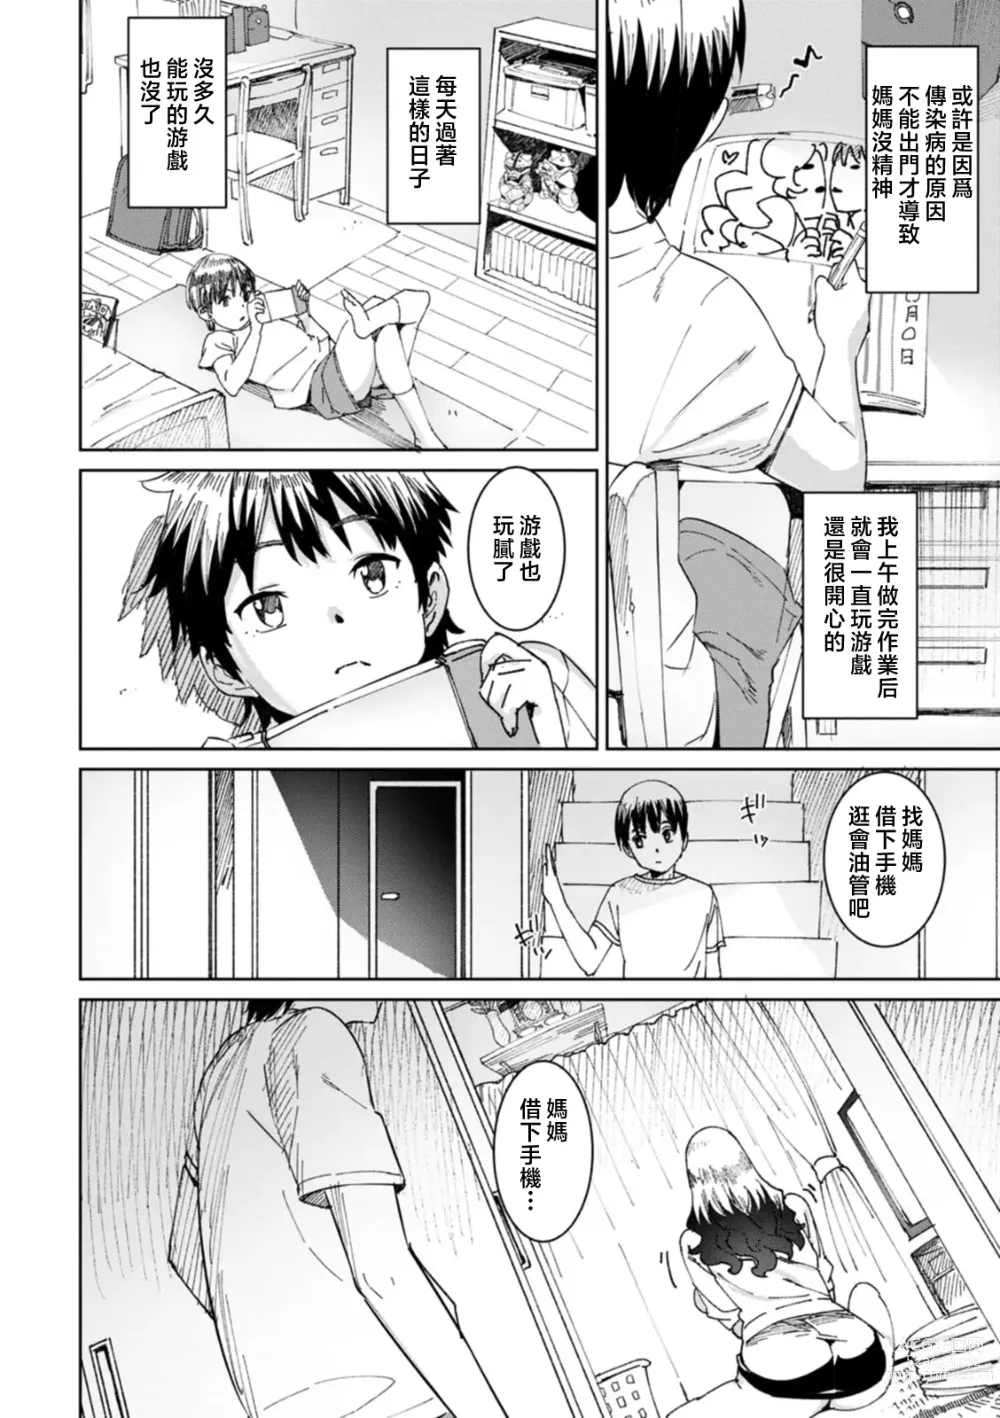 Page 4 of manga Mama no Natsuyasumi